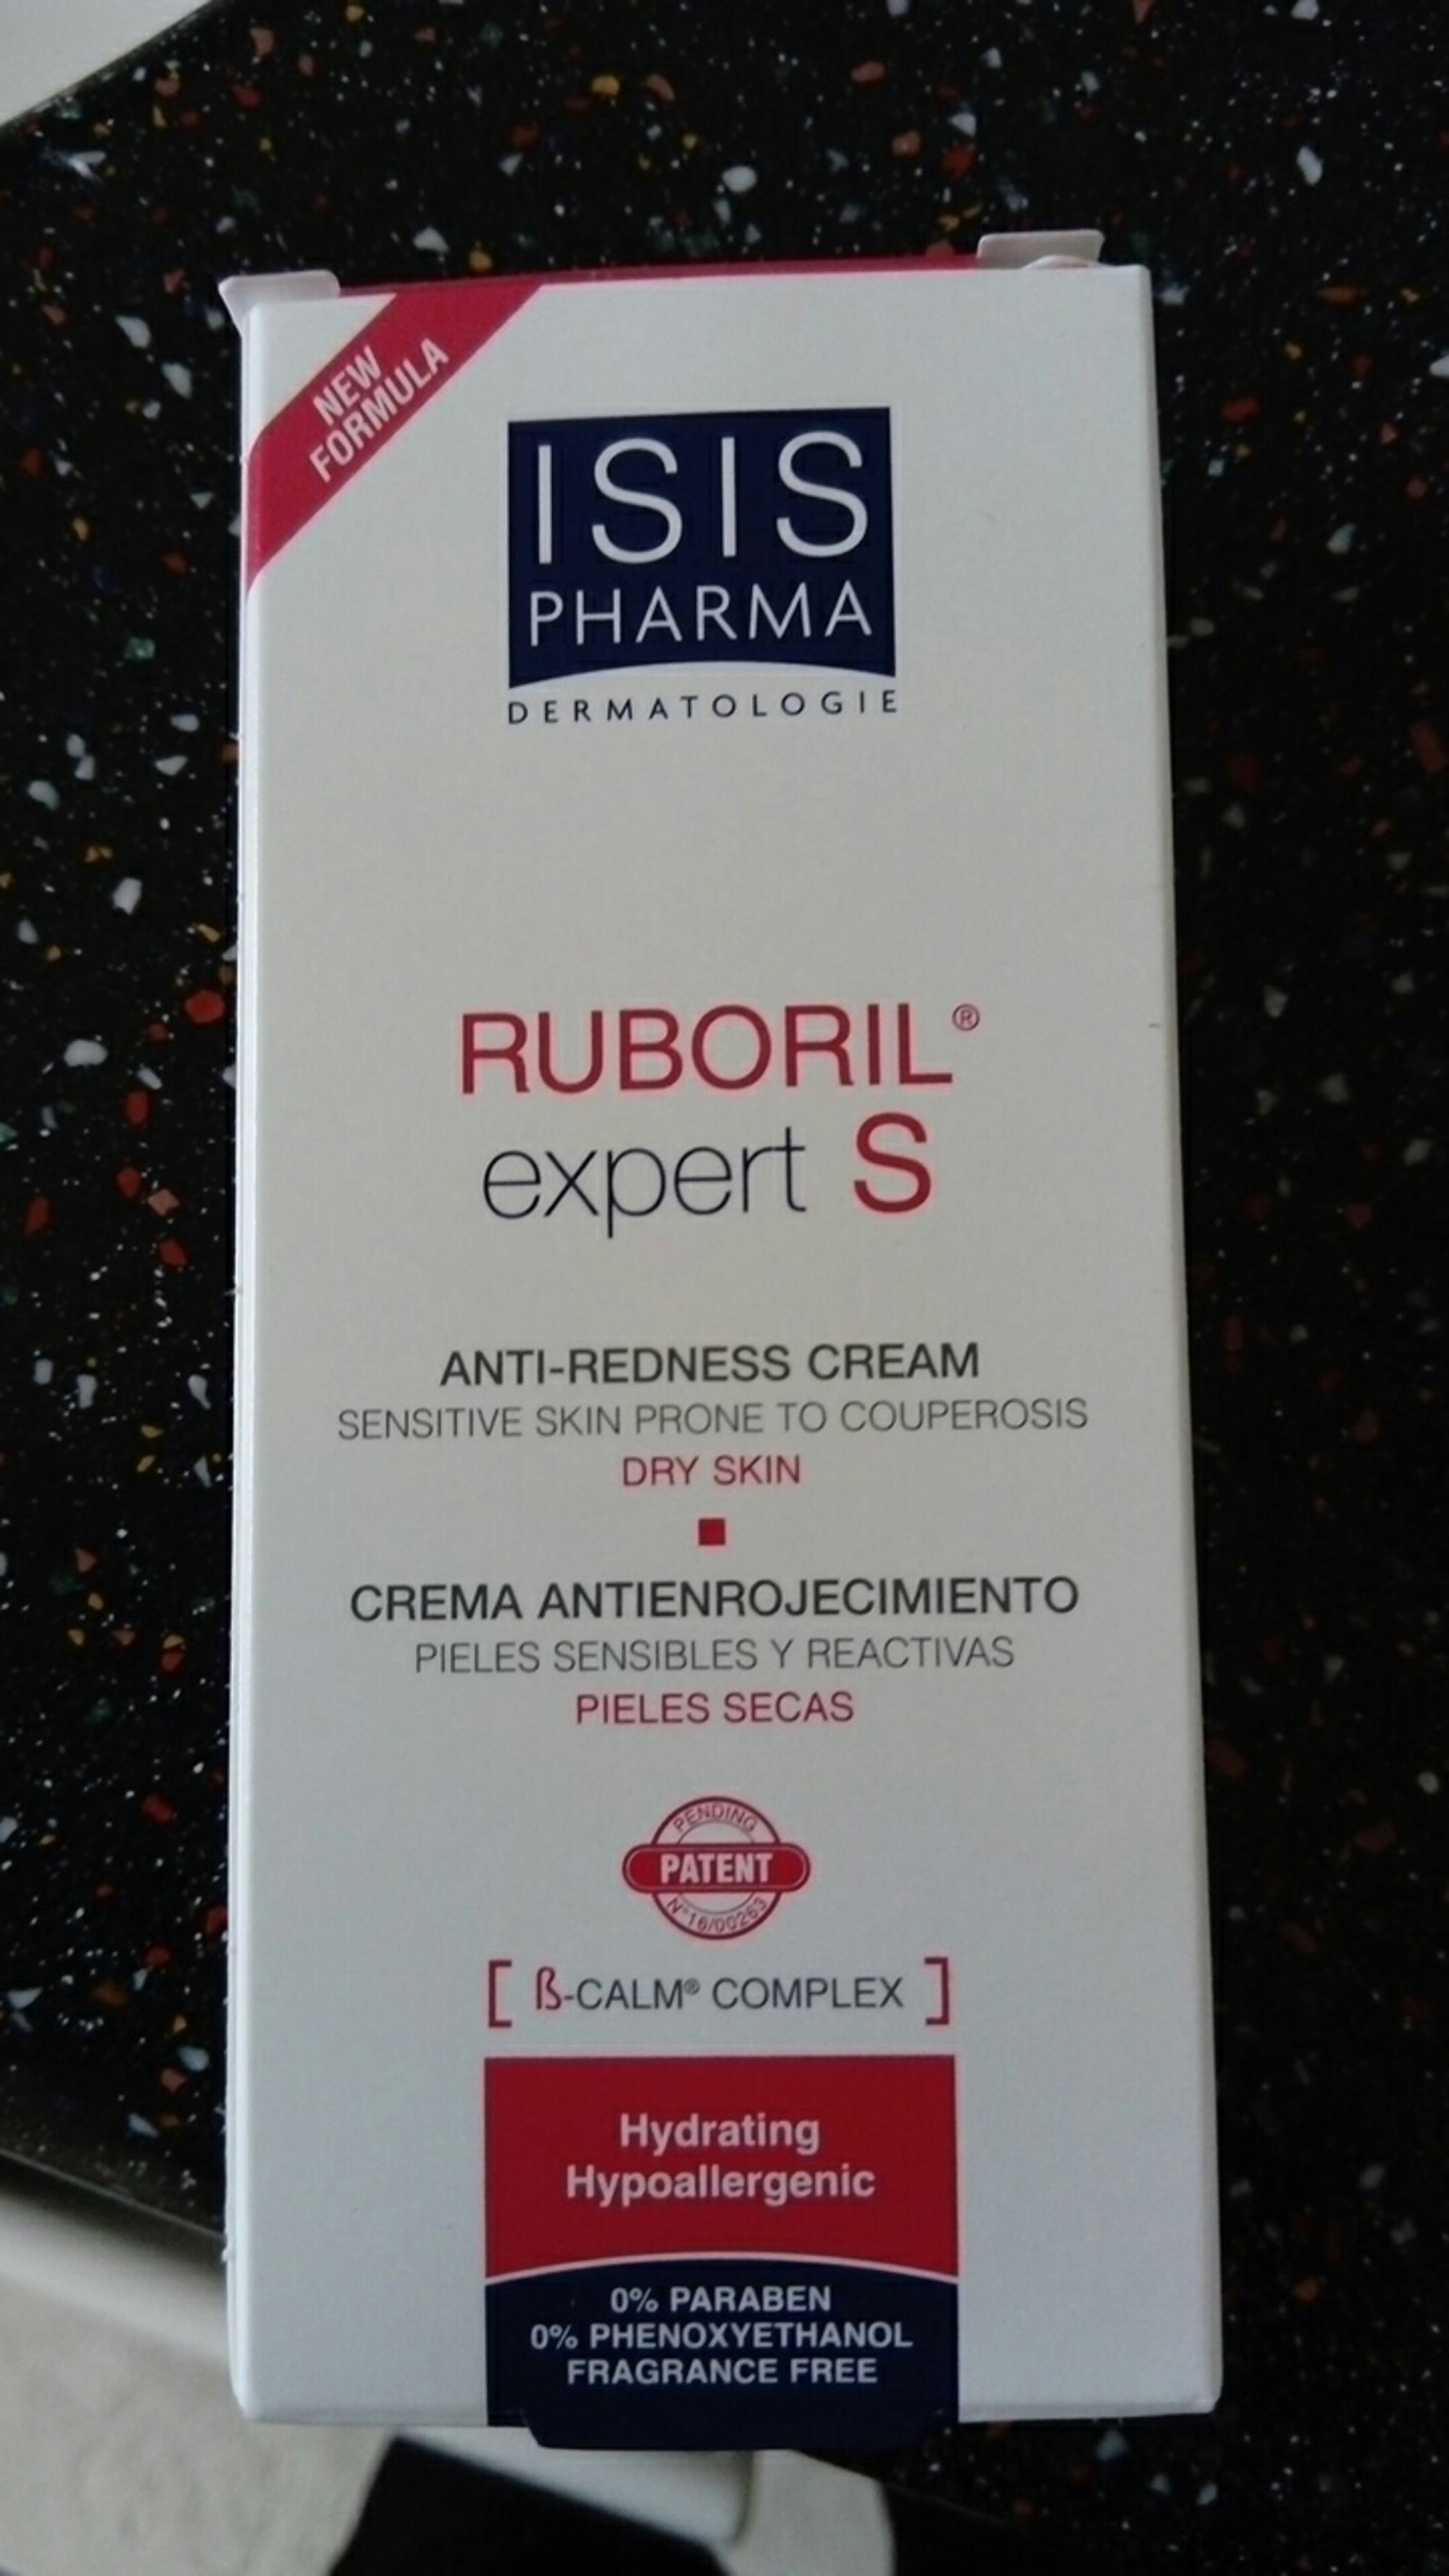 ISIS PHARMA - Ruboril Expert S - Anti-redness cream